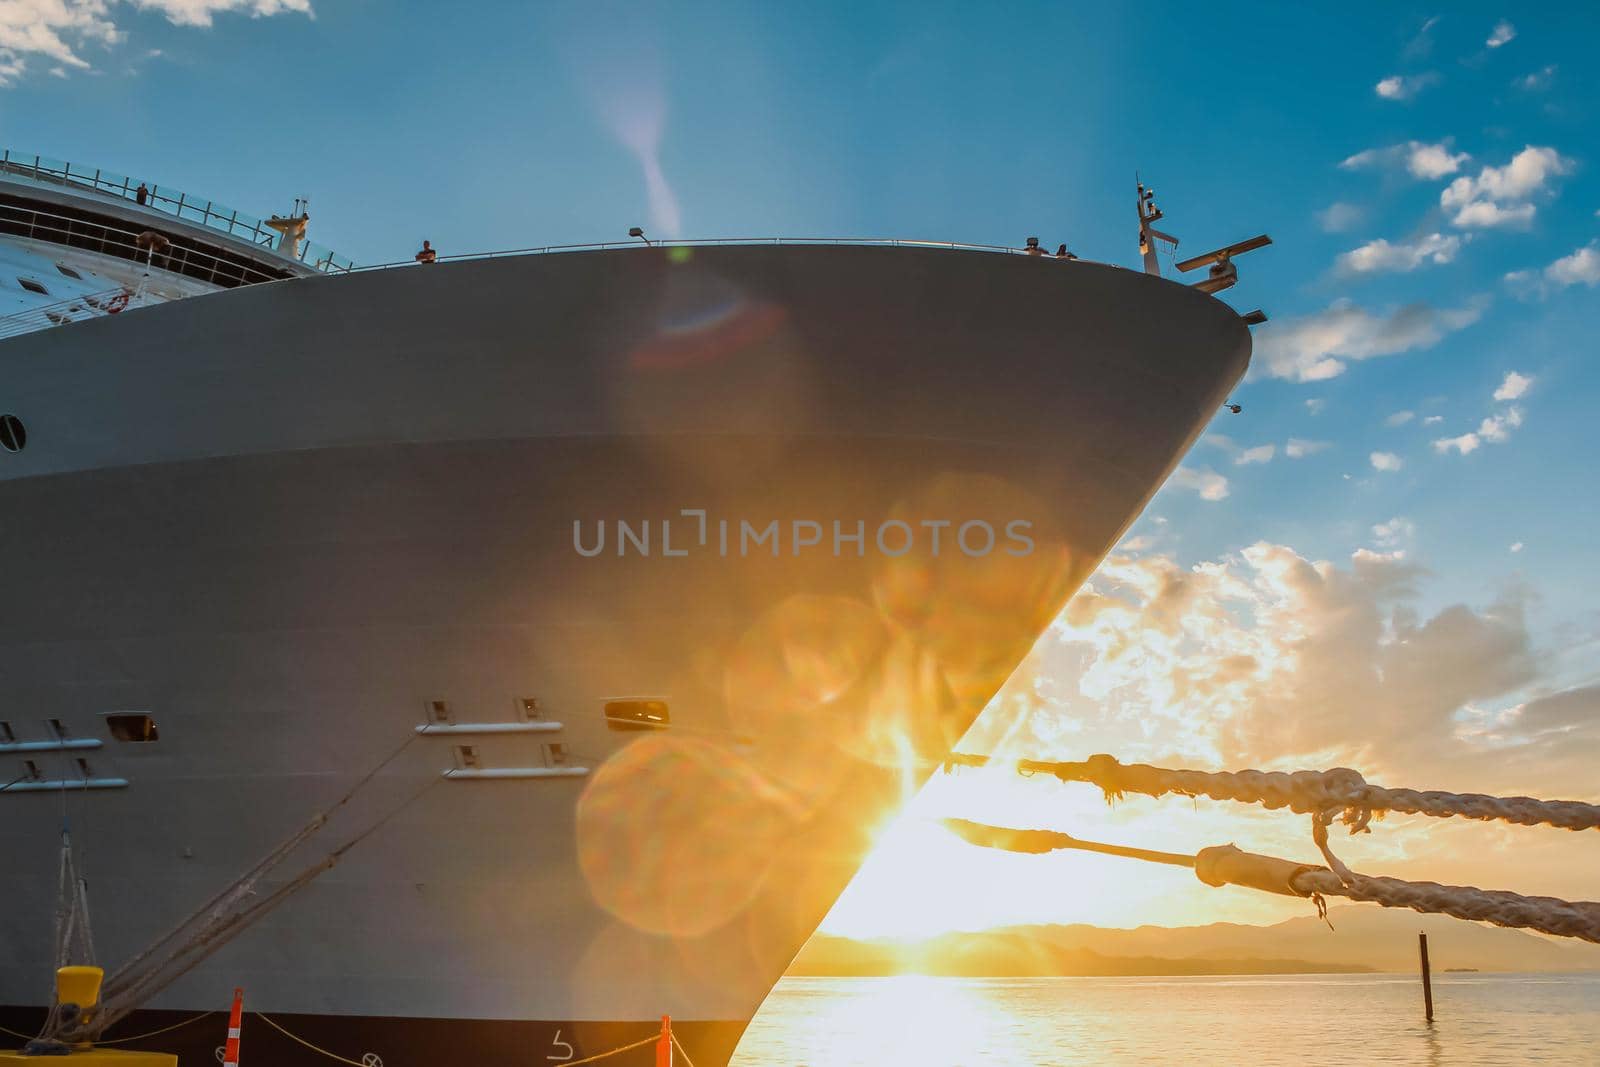 Close view of the cruise ship in beautiful sun glare by JuliaDorian